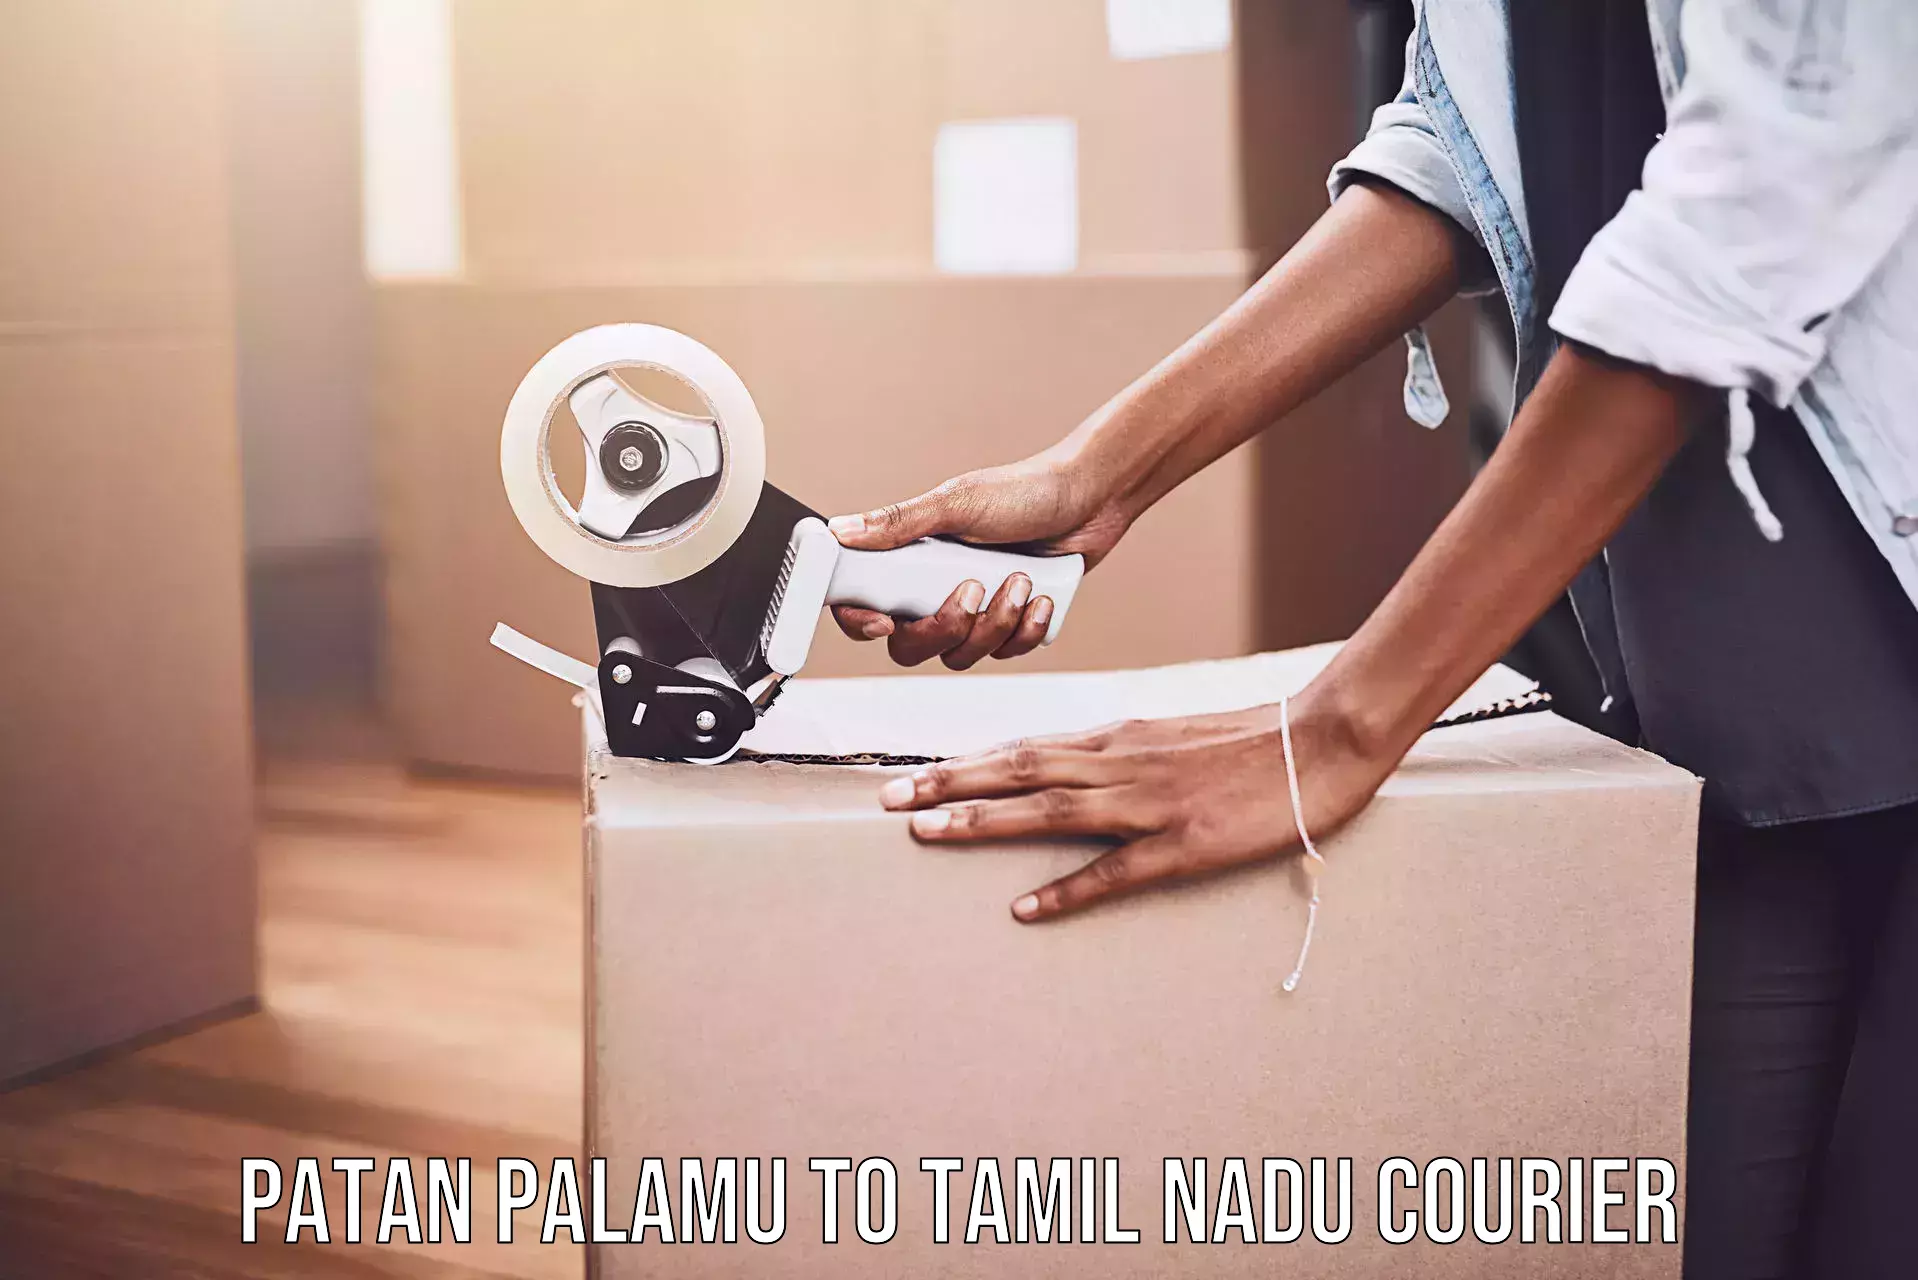 Efficient order fulfillment Patan Palamu to Tamil Nadu